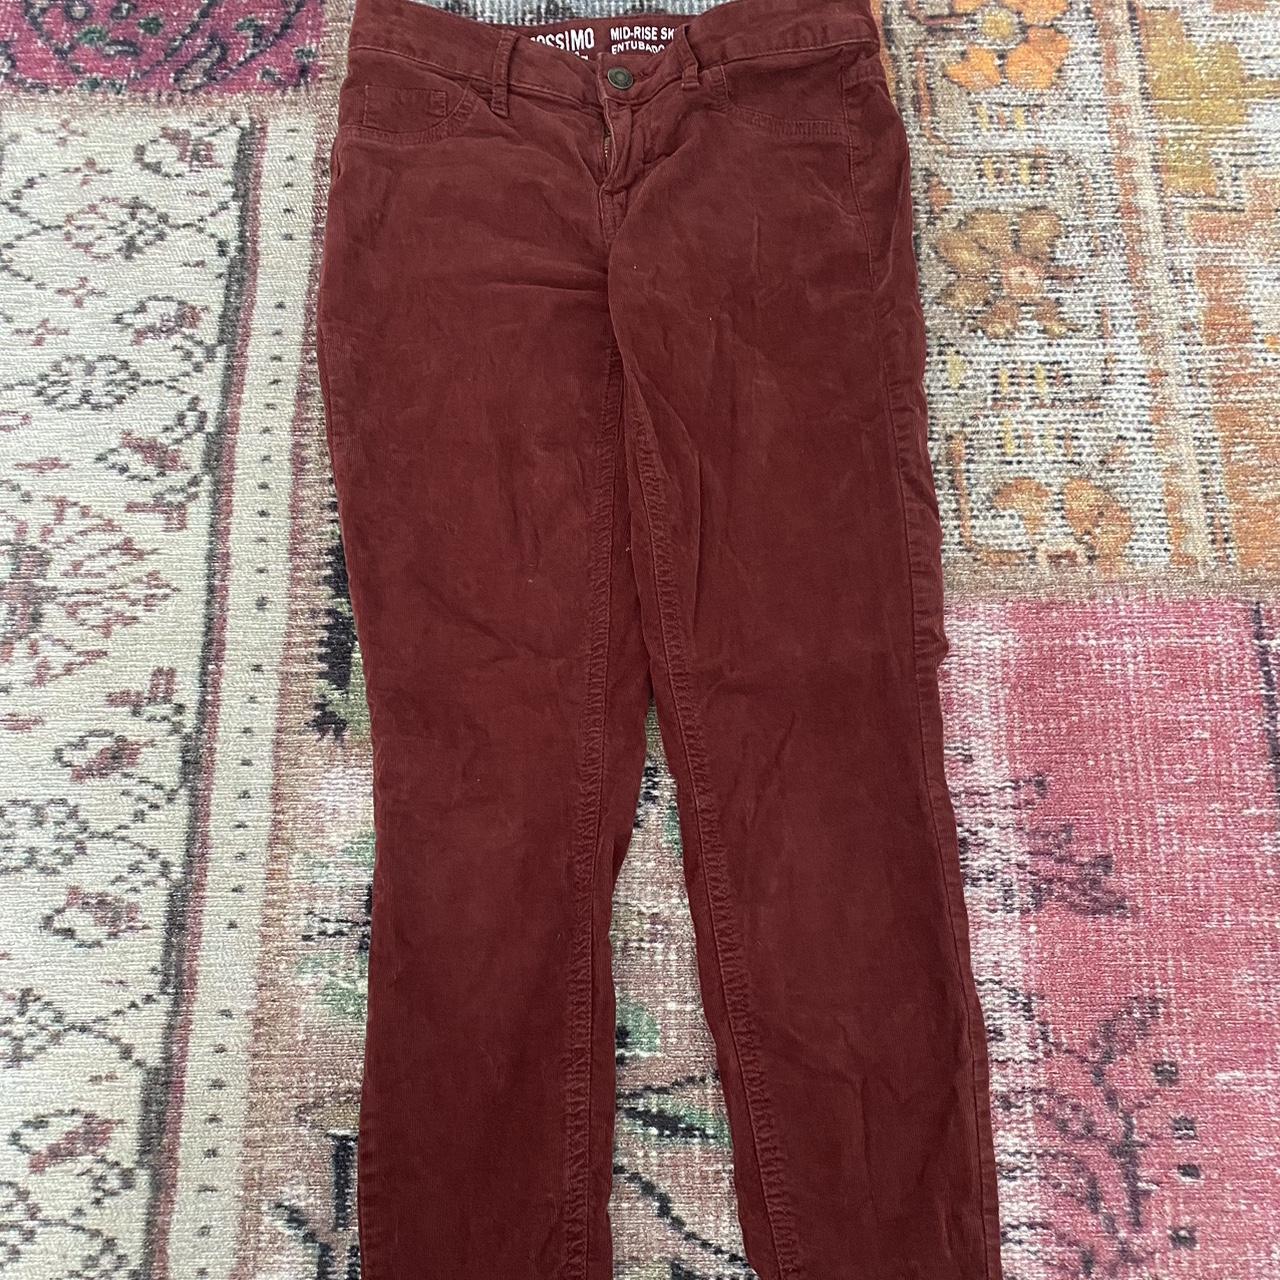 Joe Fresh Juniors Burgundy Slim Corduroy Mid Rise Pants Size 29 | eBay